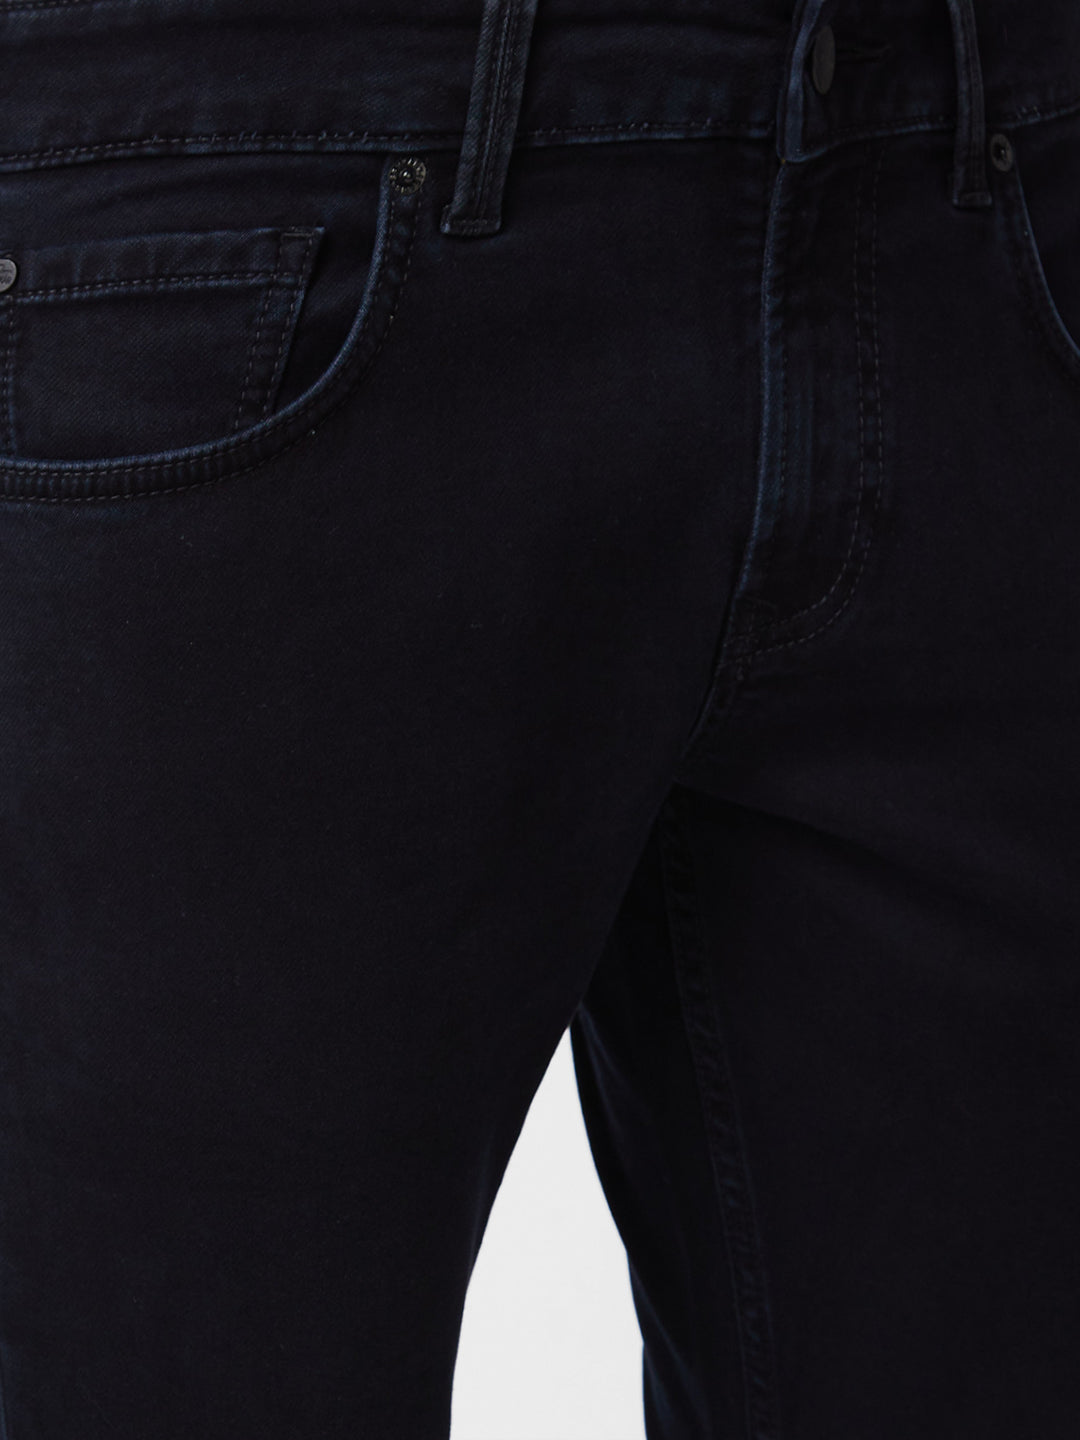 Spykar Mid Rise Slim Fit Black Jeans For Men